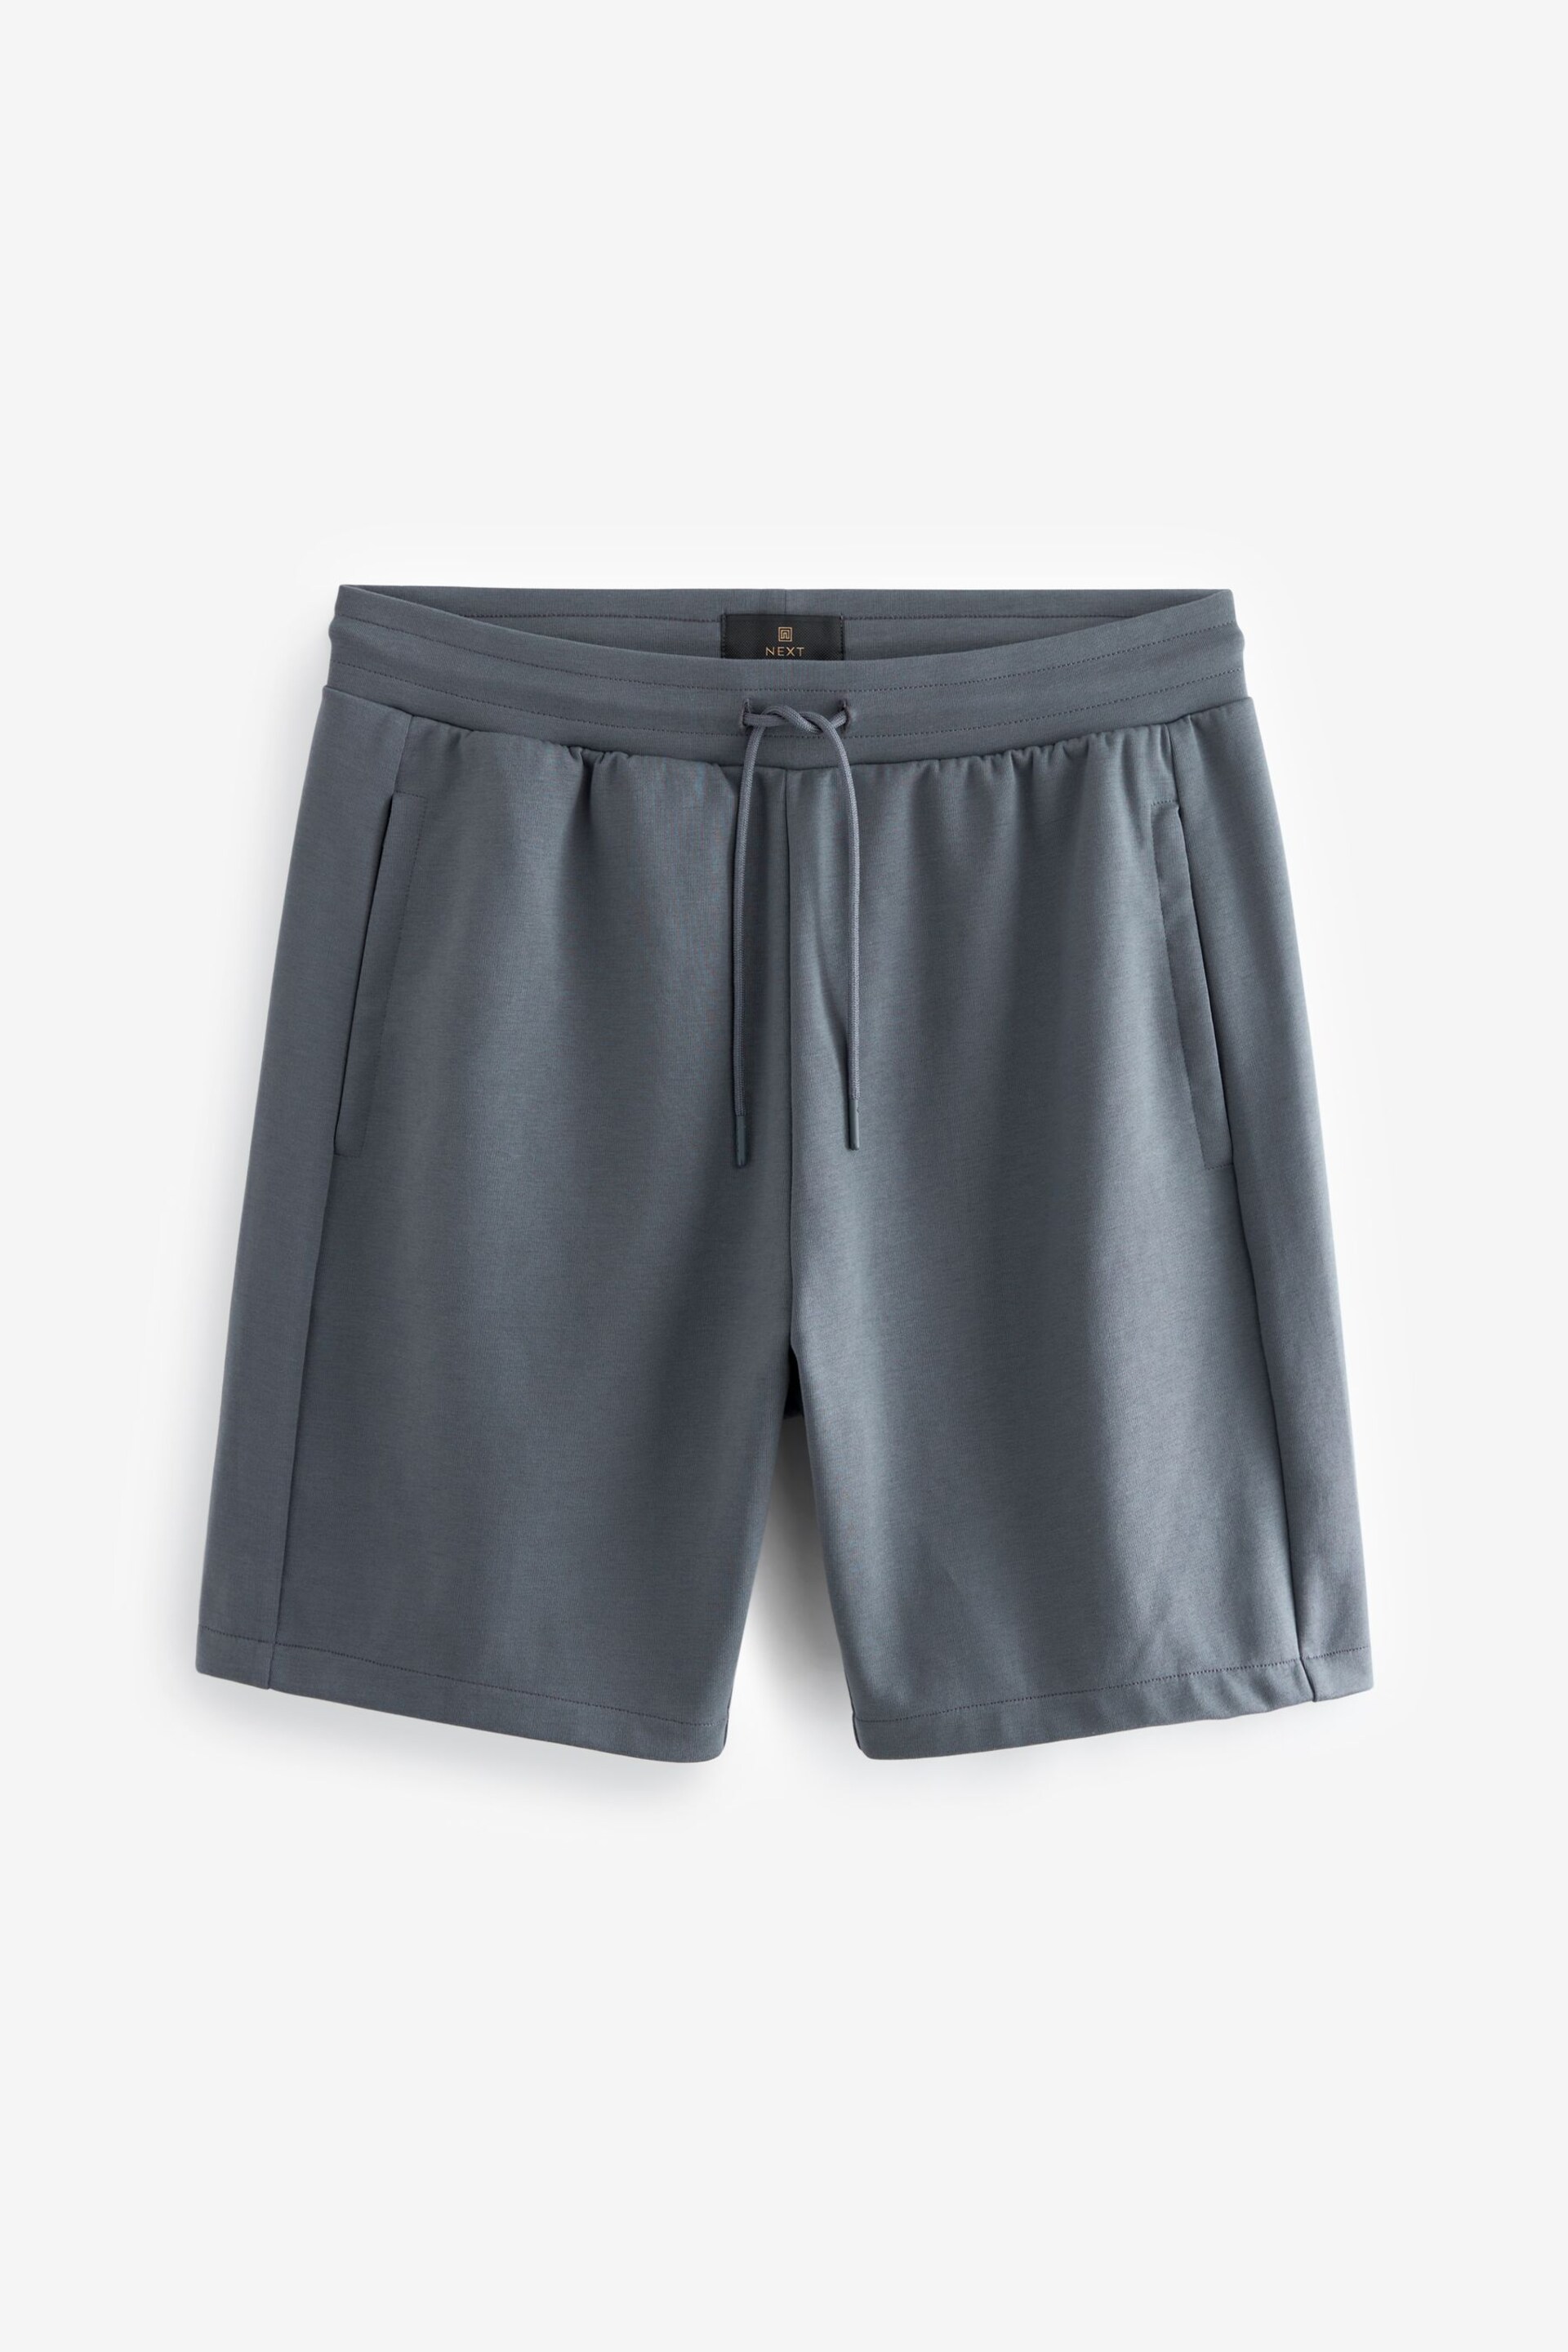 Blue Zip Pocket Jersey Shorts - Image 4 of 8